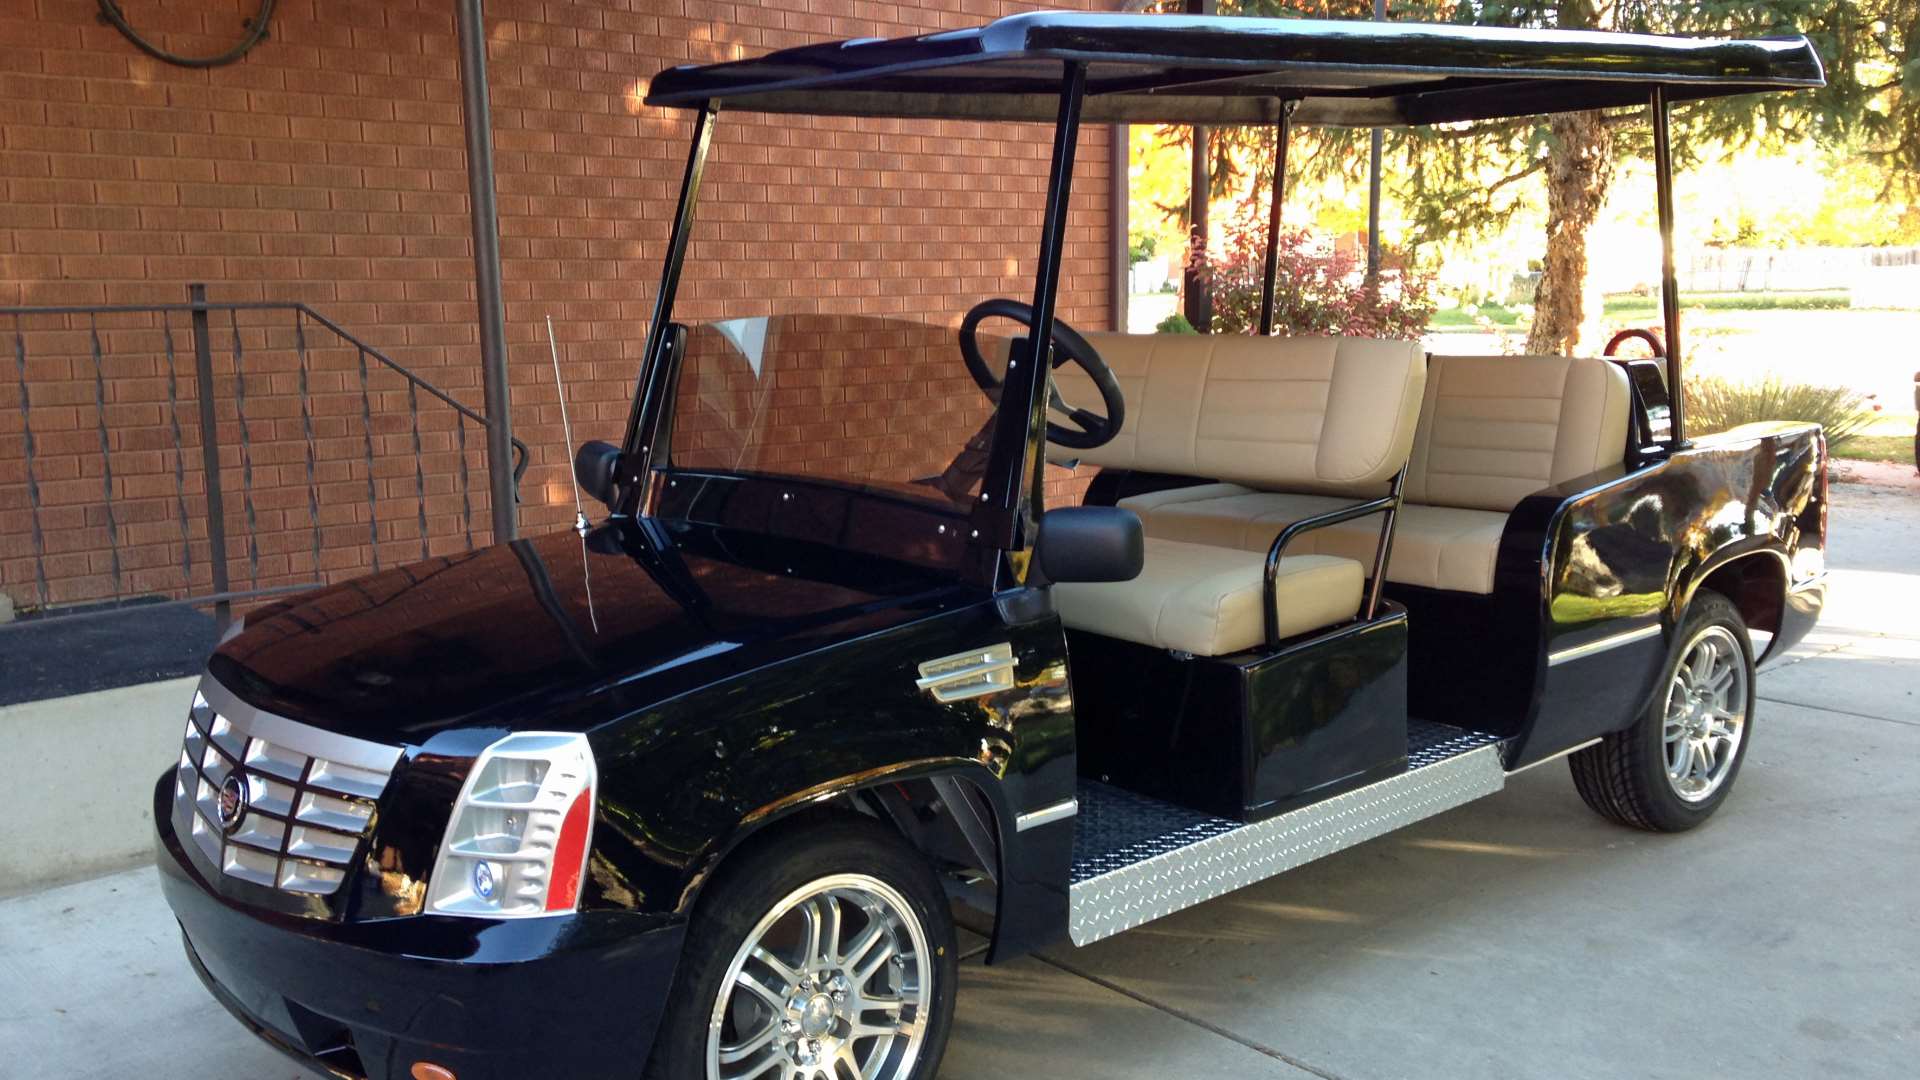 Purpose of The Cadillac Luxury Golf Car